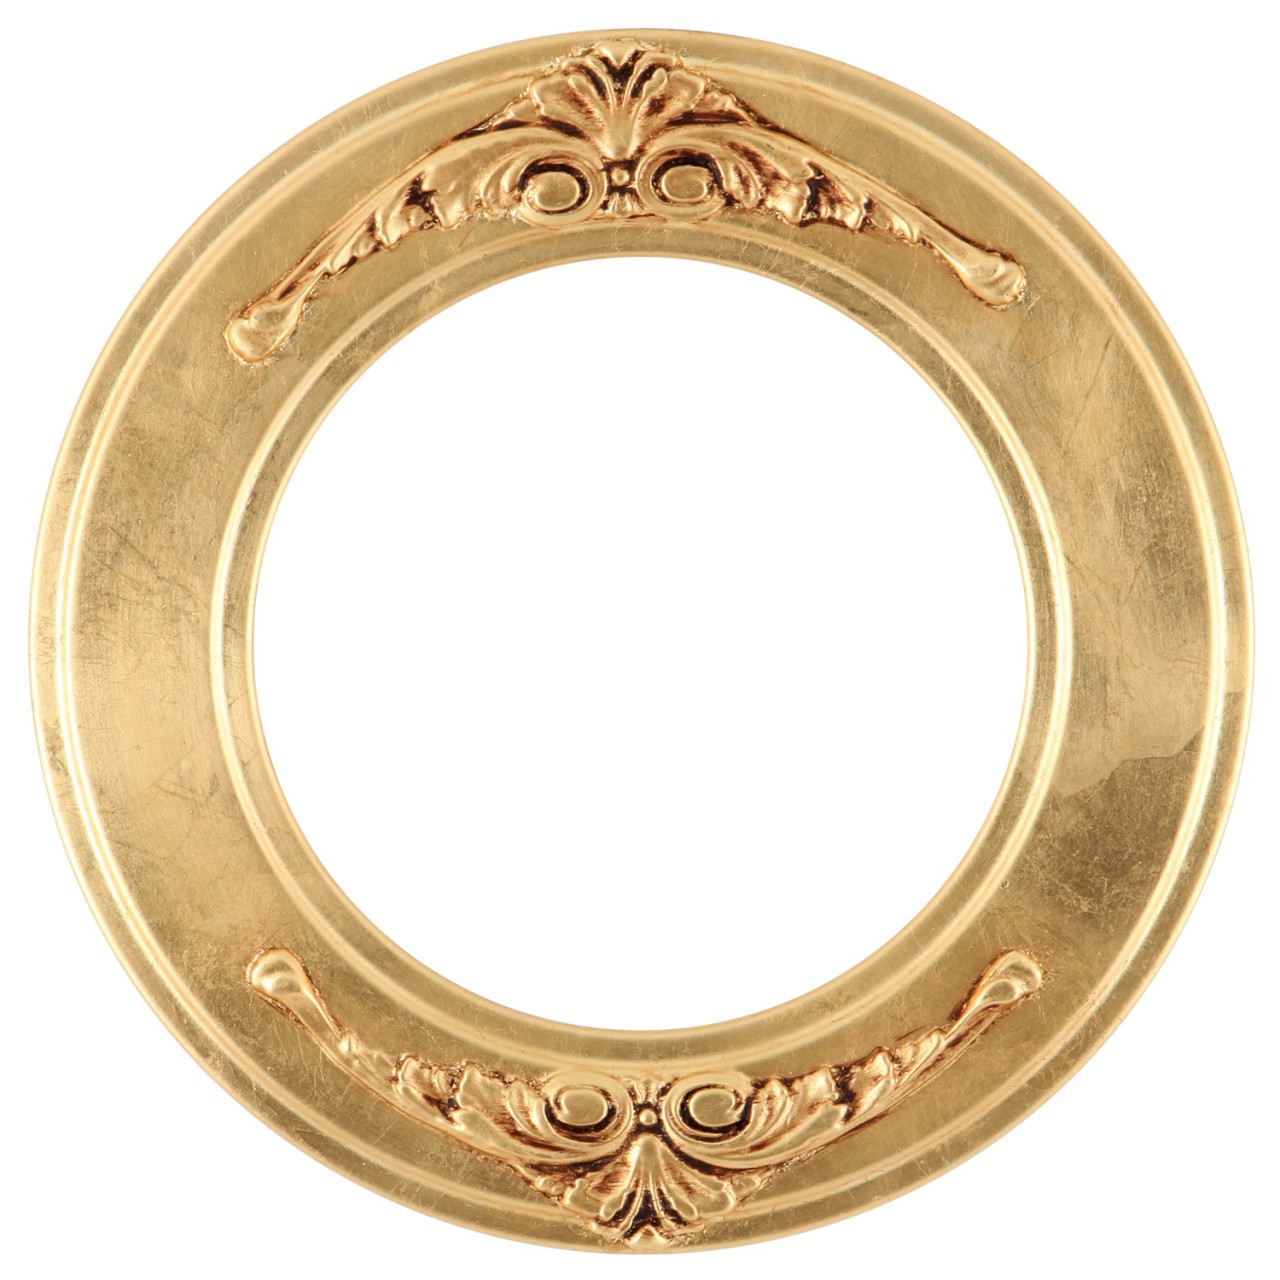 Ramino Round Frame #831 - Desert Gold